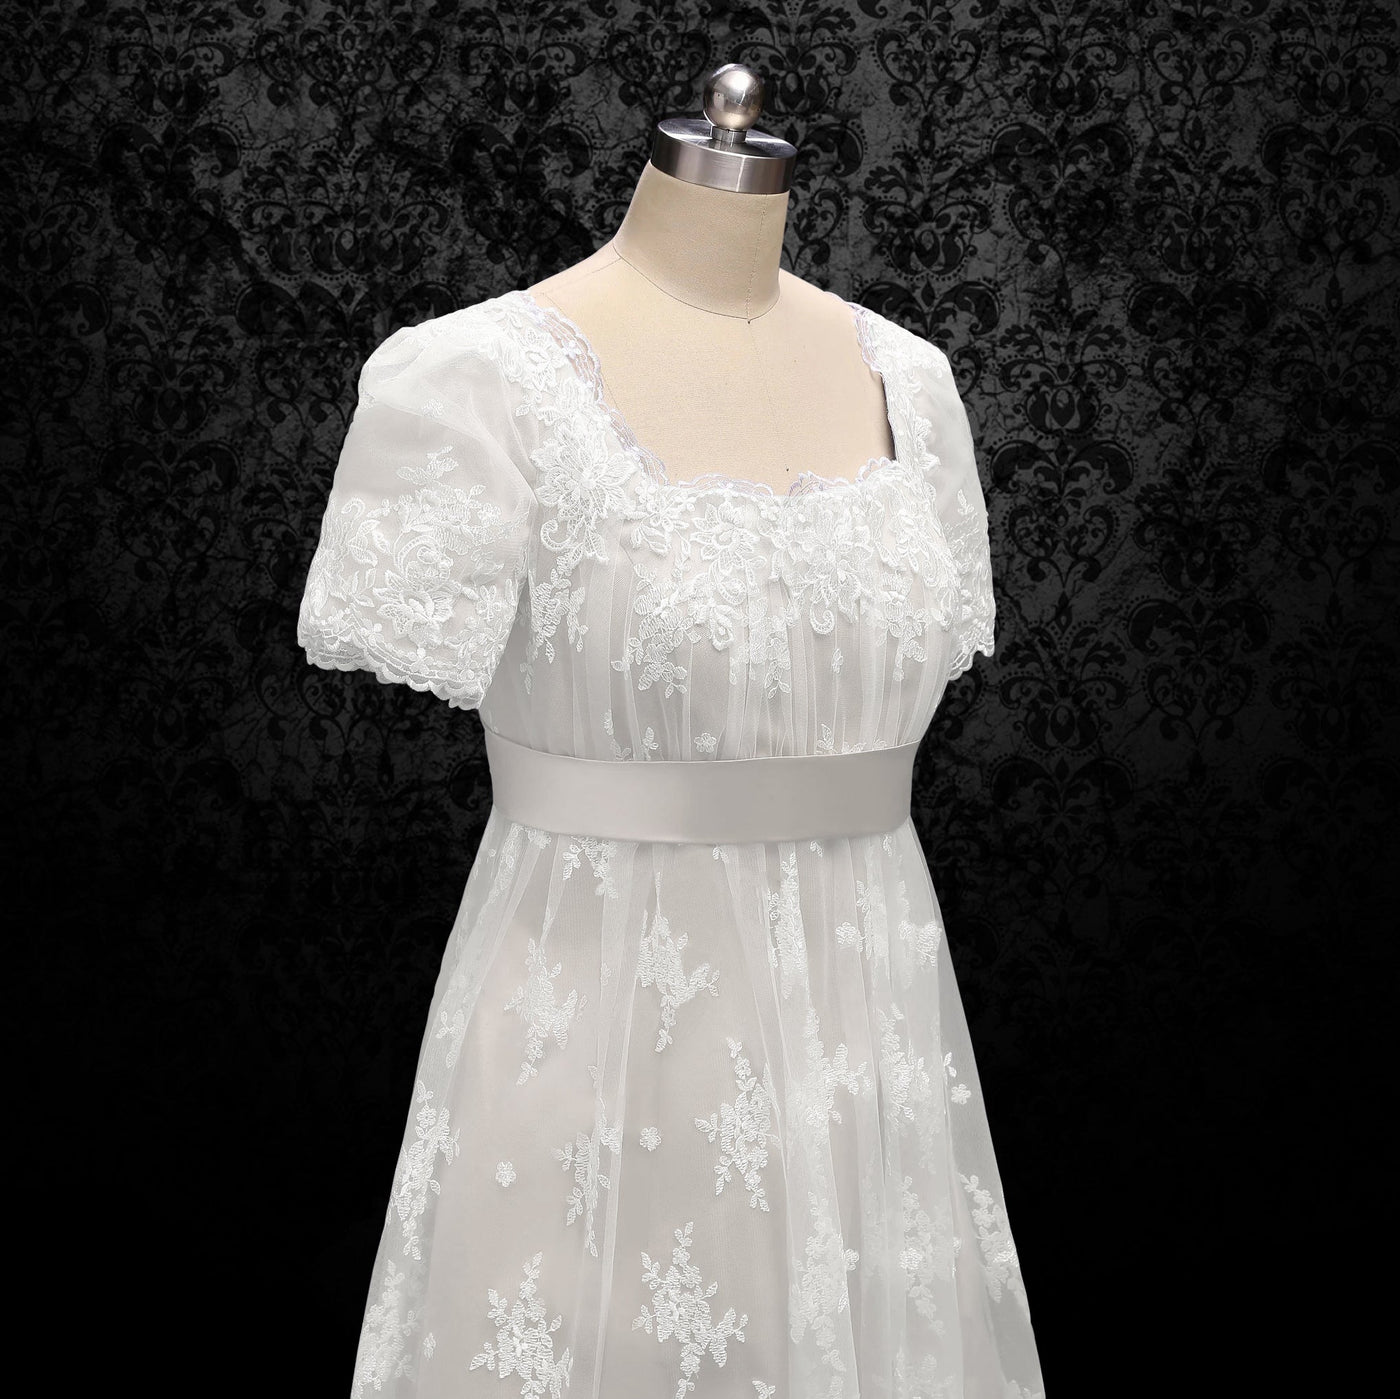 Bridgerton Daphne White Bridal Dress With Lace - Regency Era Ball Gown Plus Size - WonderlandByLilian